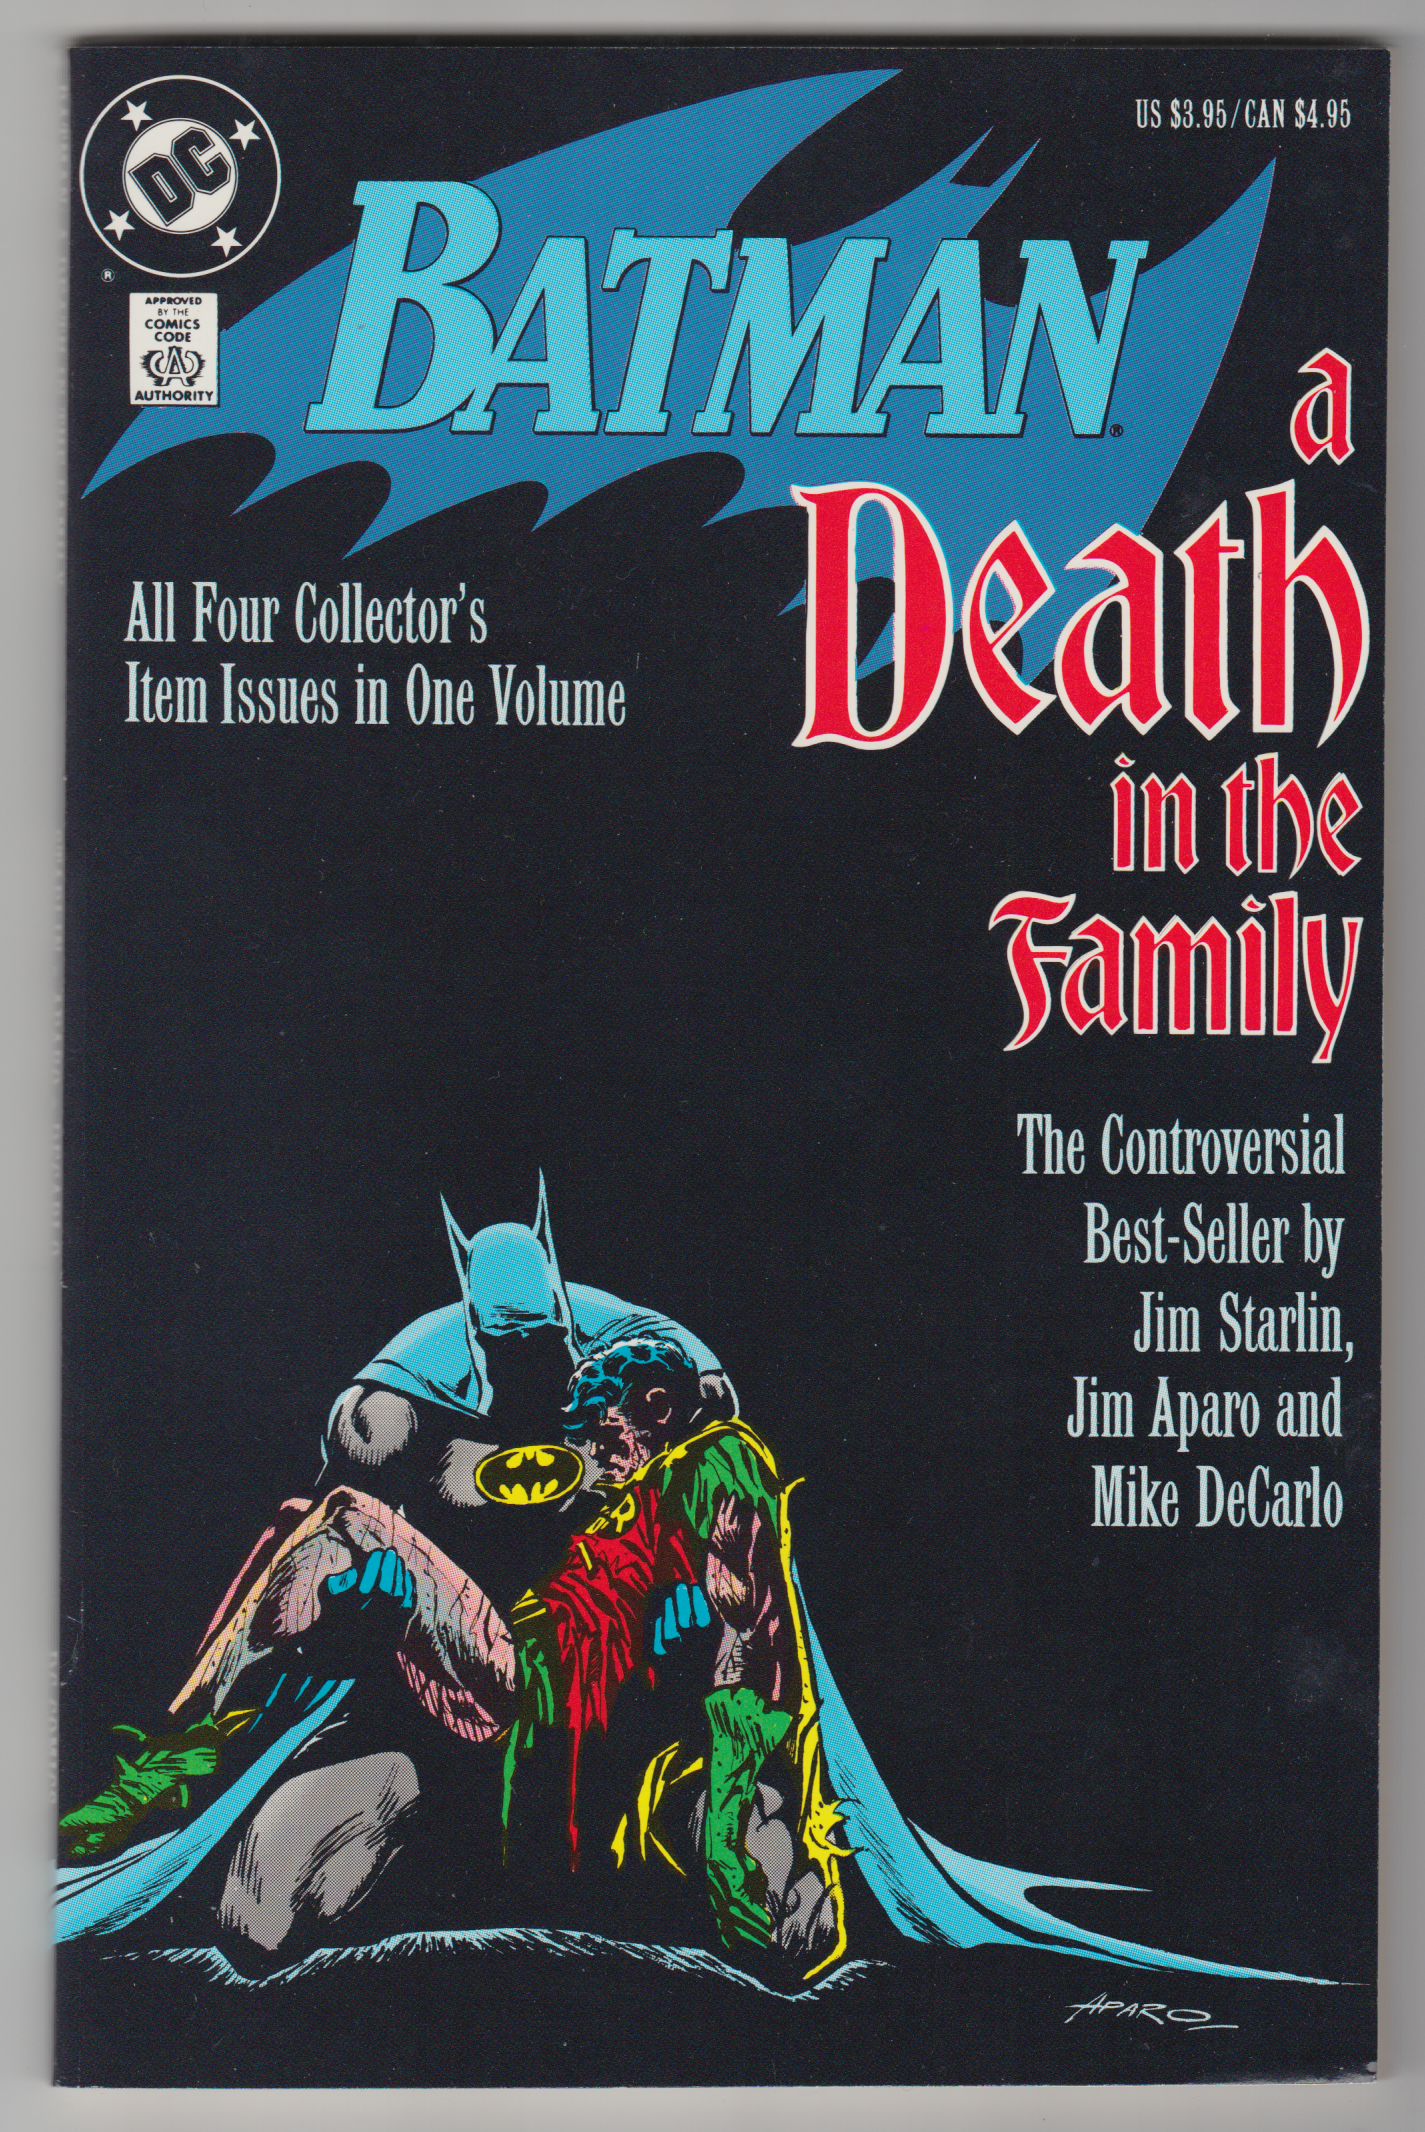 Бэтмен смерть в семье комикс 1988. Batman Death in the Family комикс.